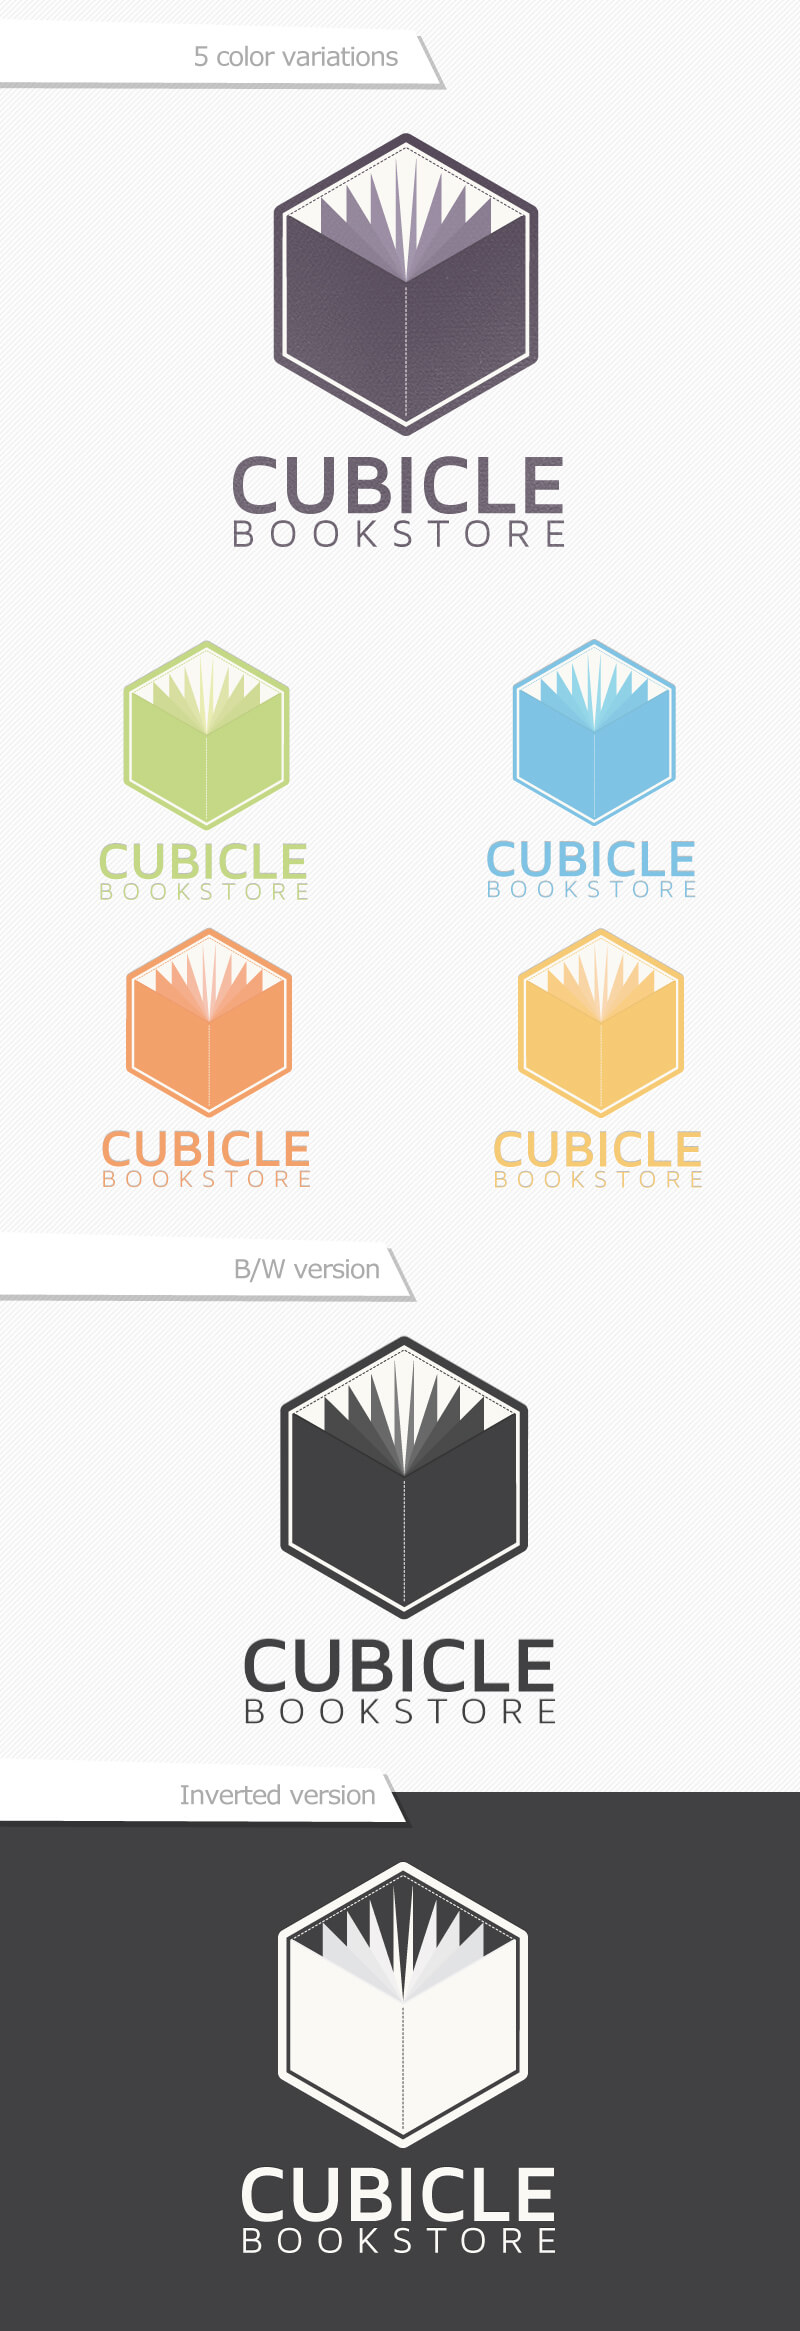 Cubicle Bookstore logo